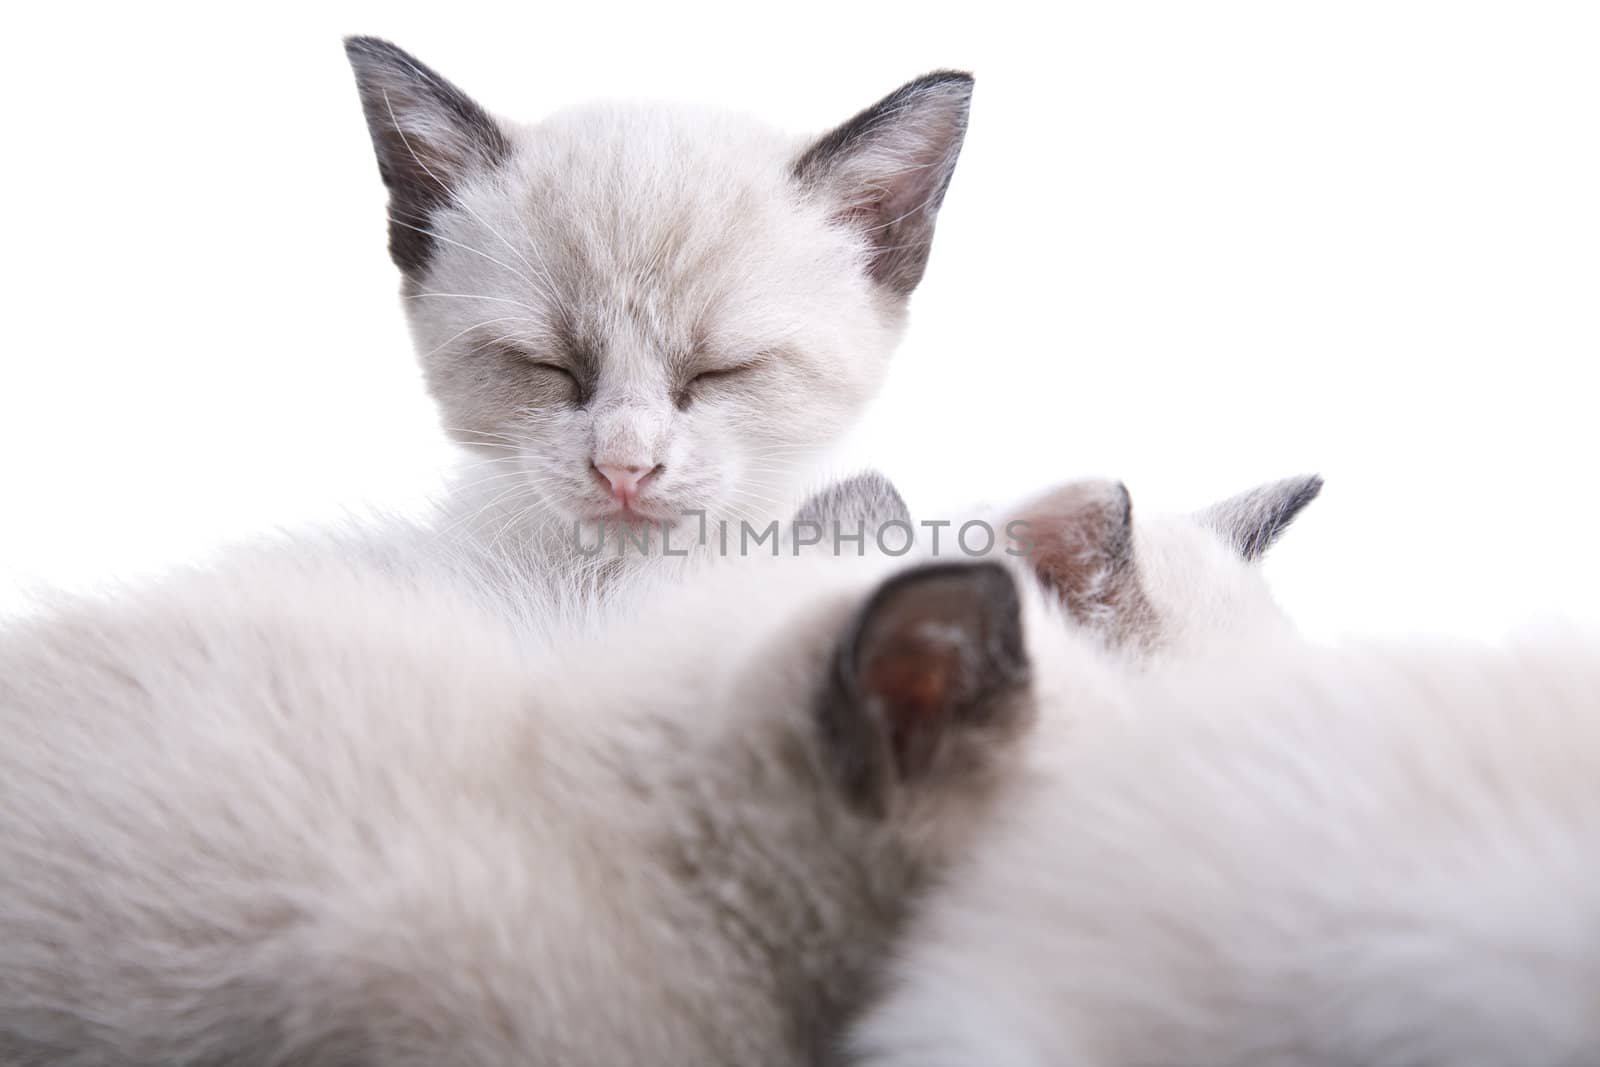 Baby Kittens Sleeping by ajn